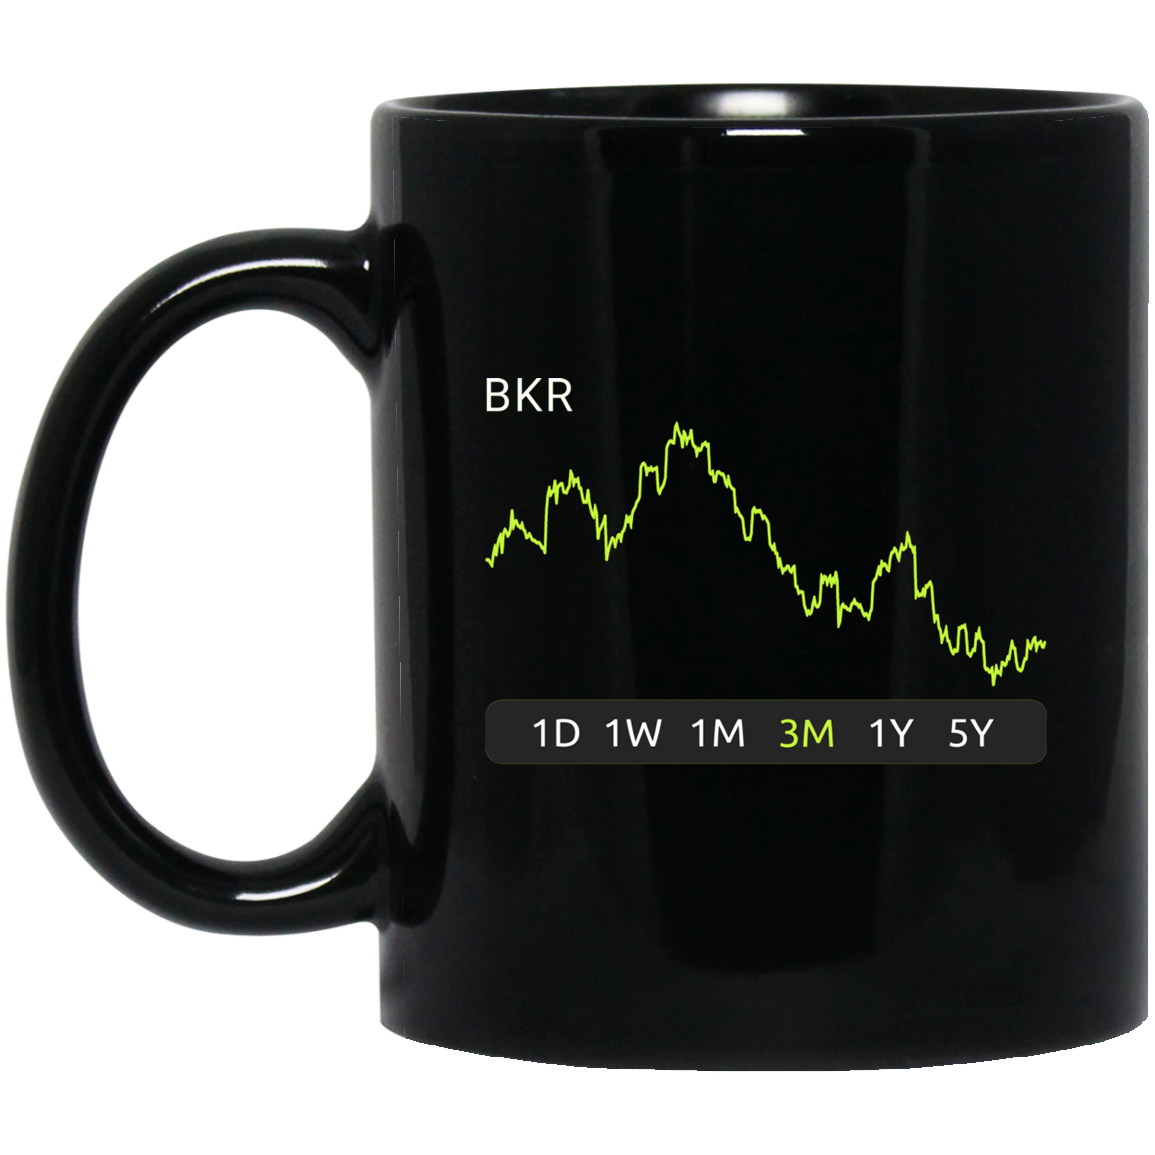 BKR Stock 3m Mug